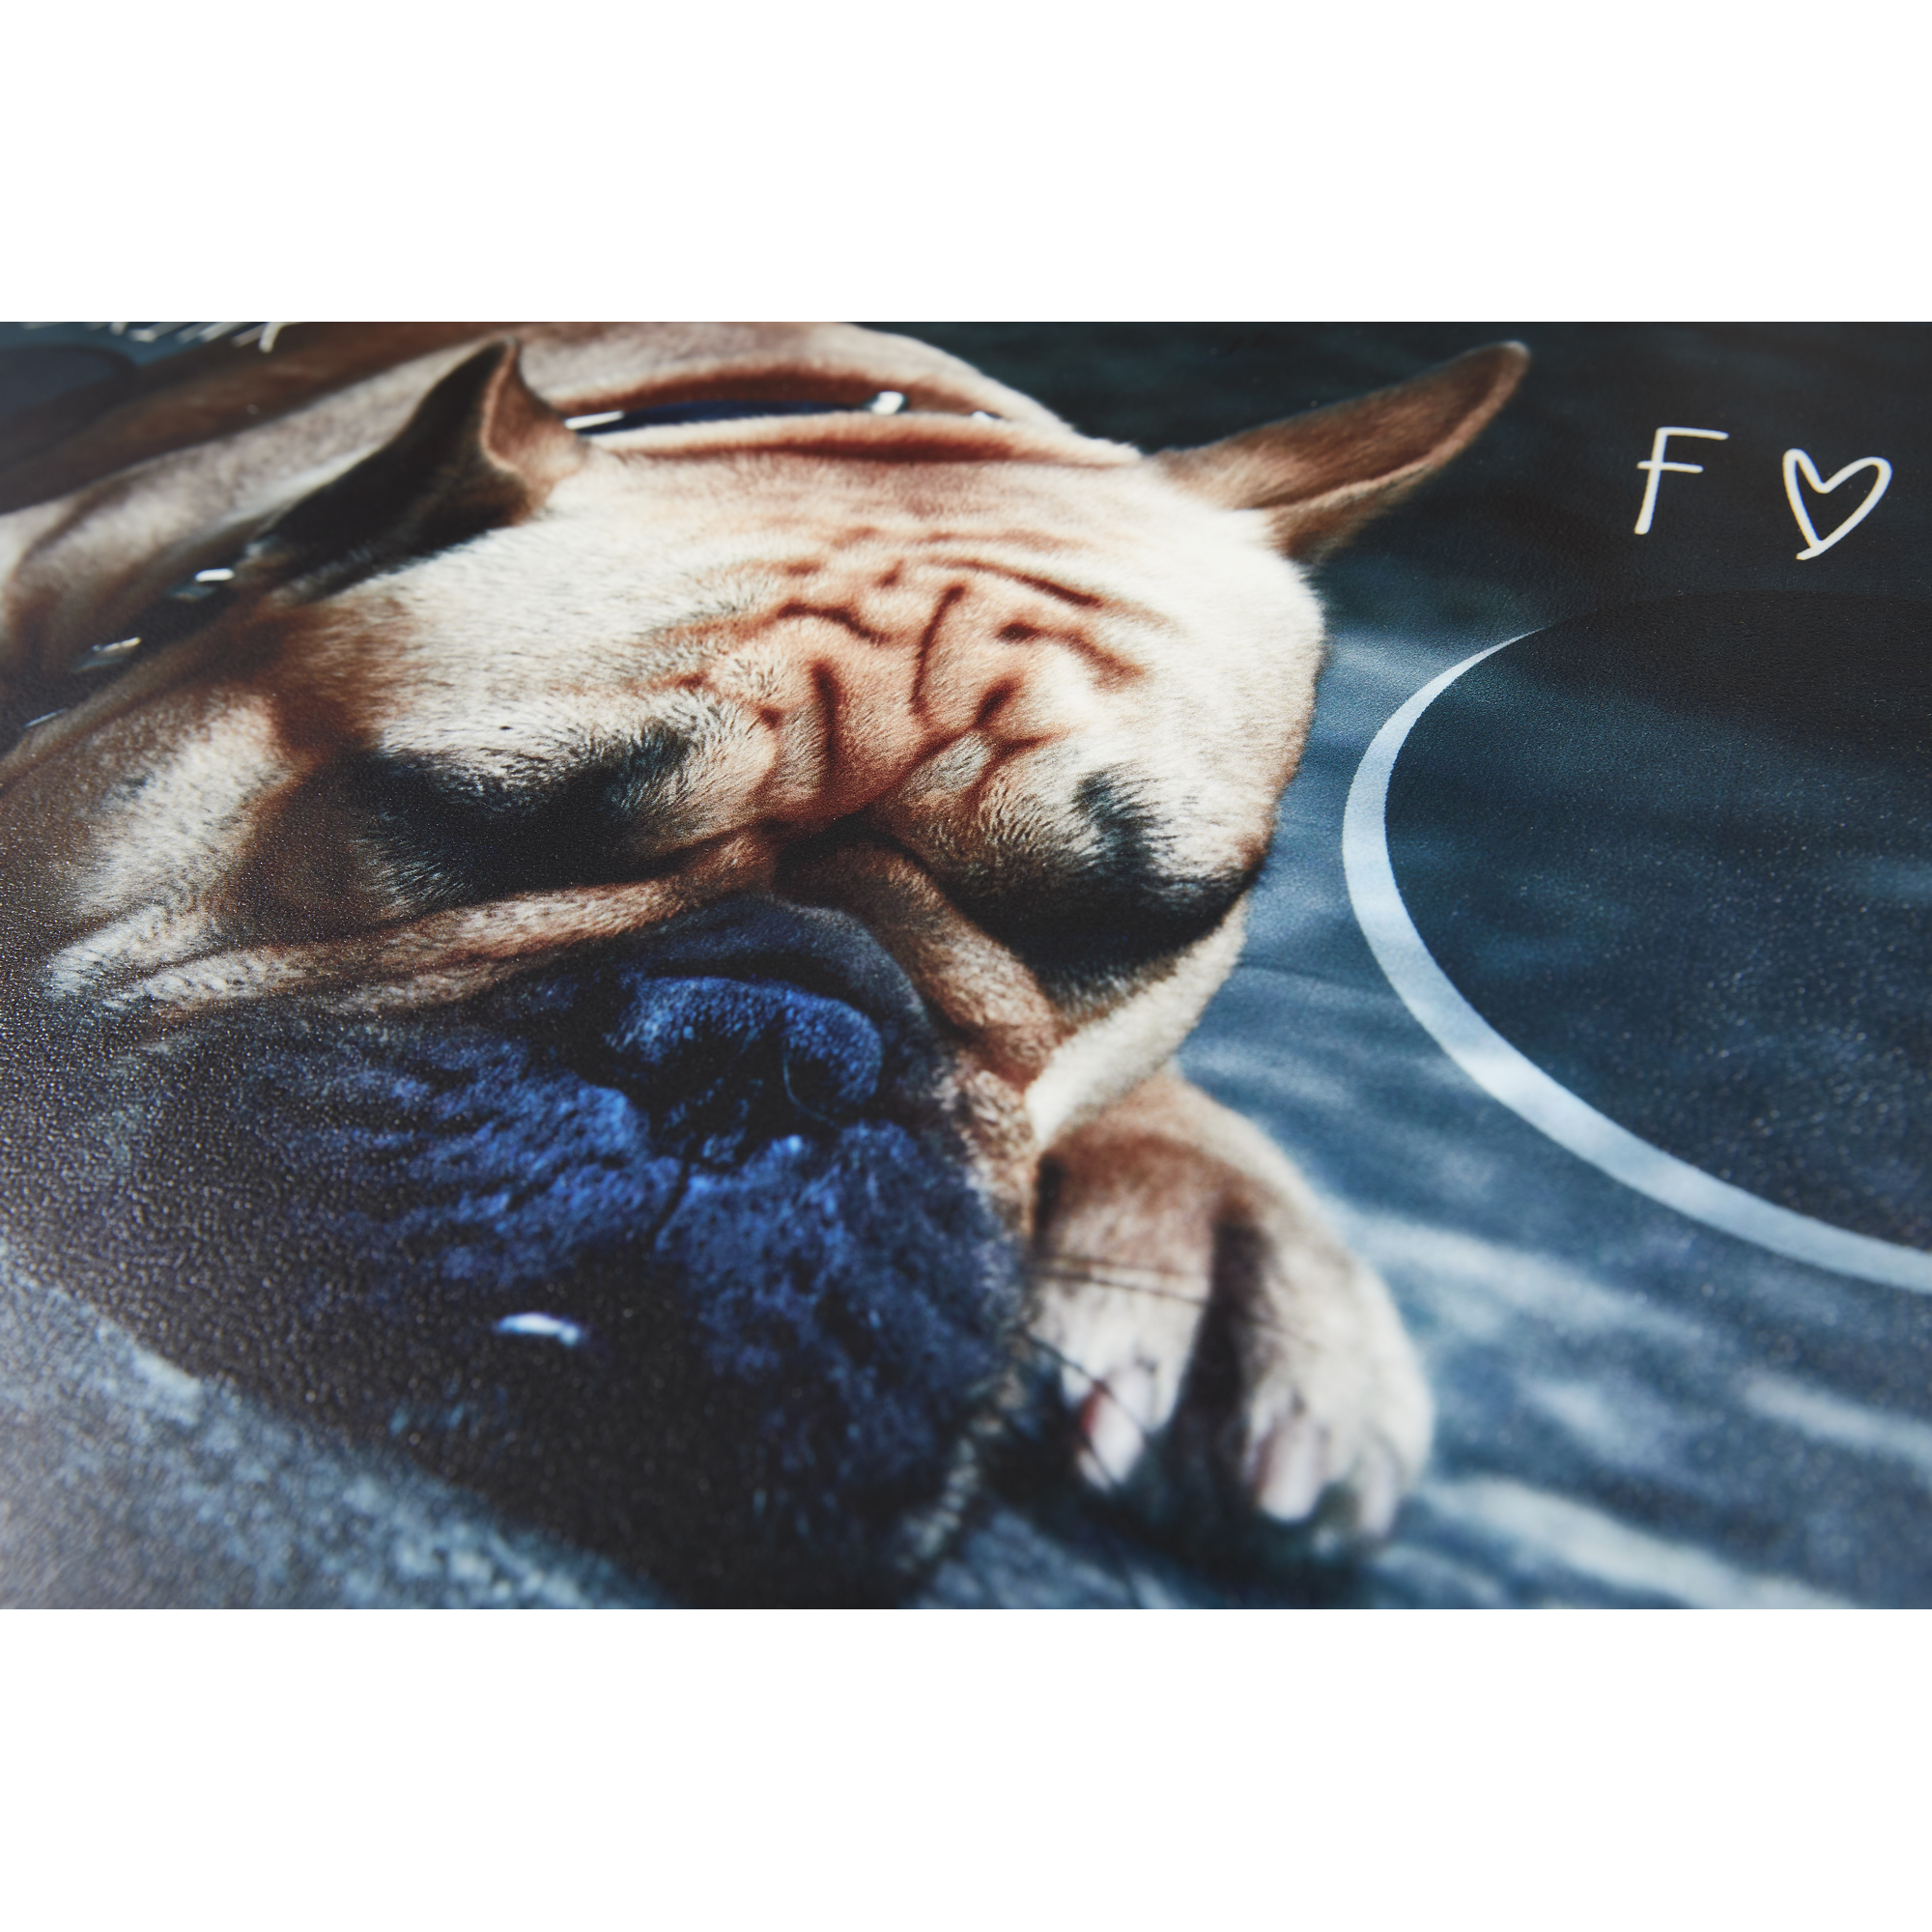 Napfunterlage 'Proper Food + Drink Pug' mehrfarbig 49 x 79 cm + product picture